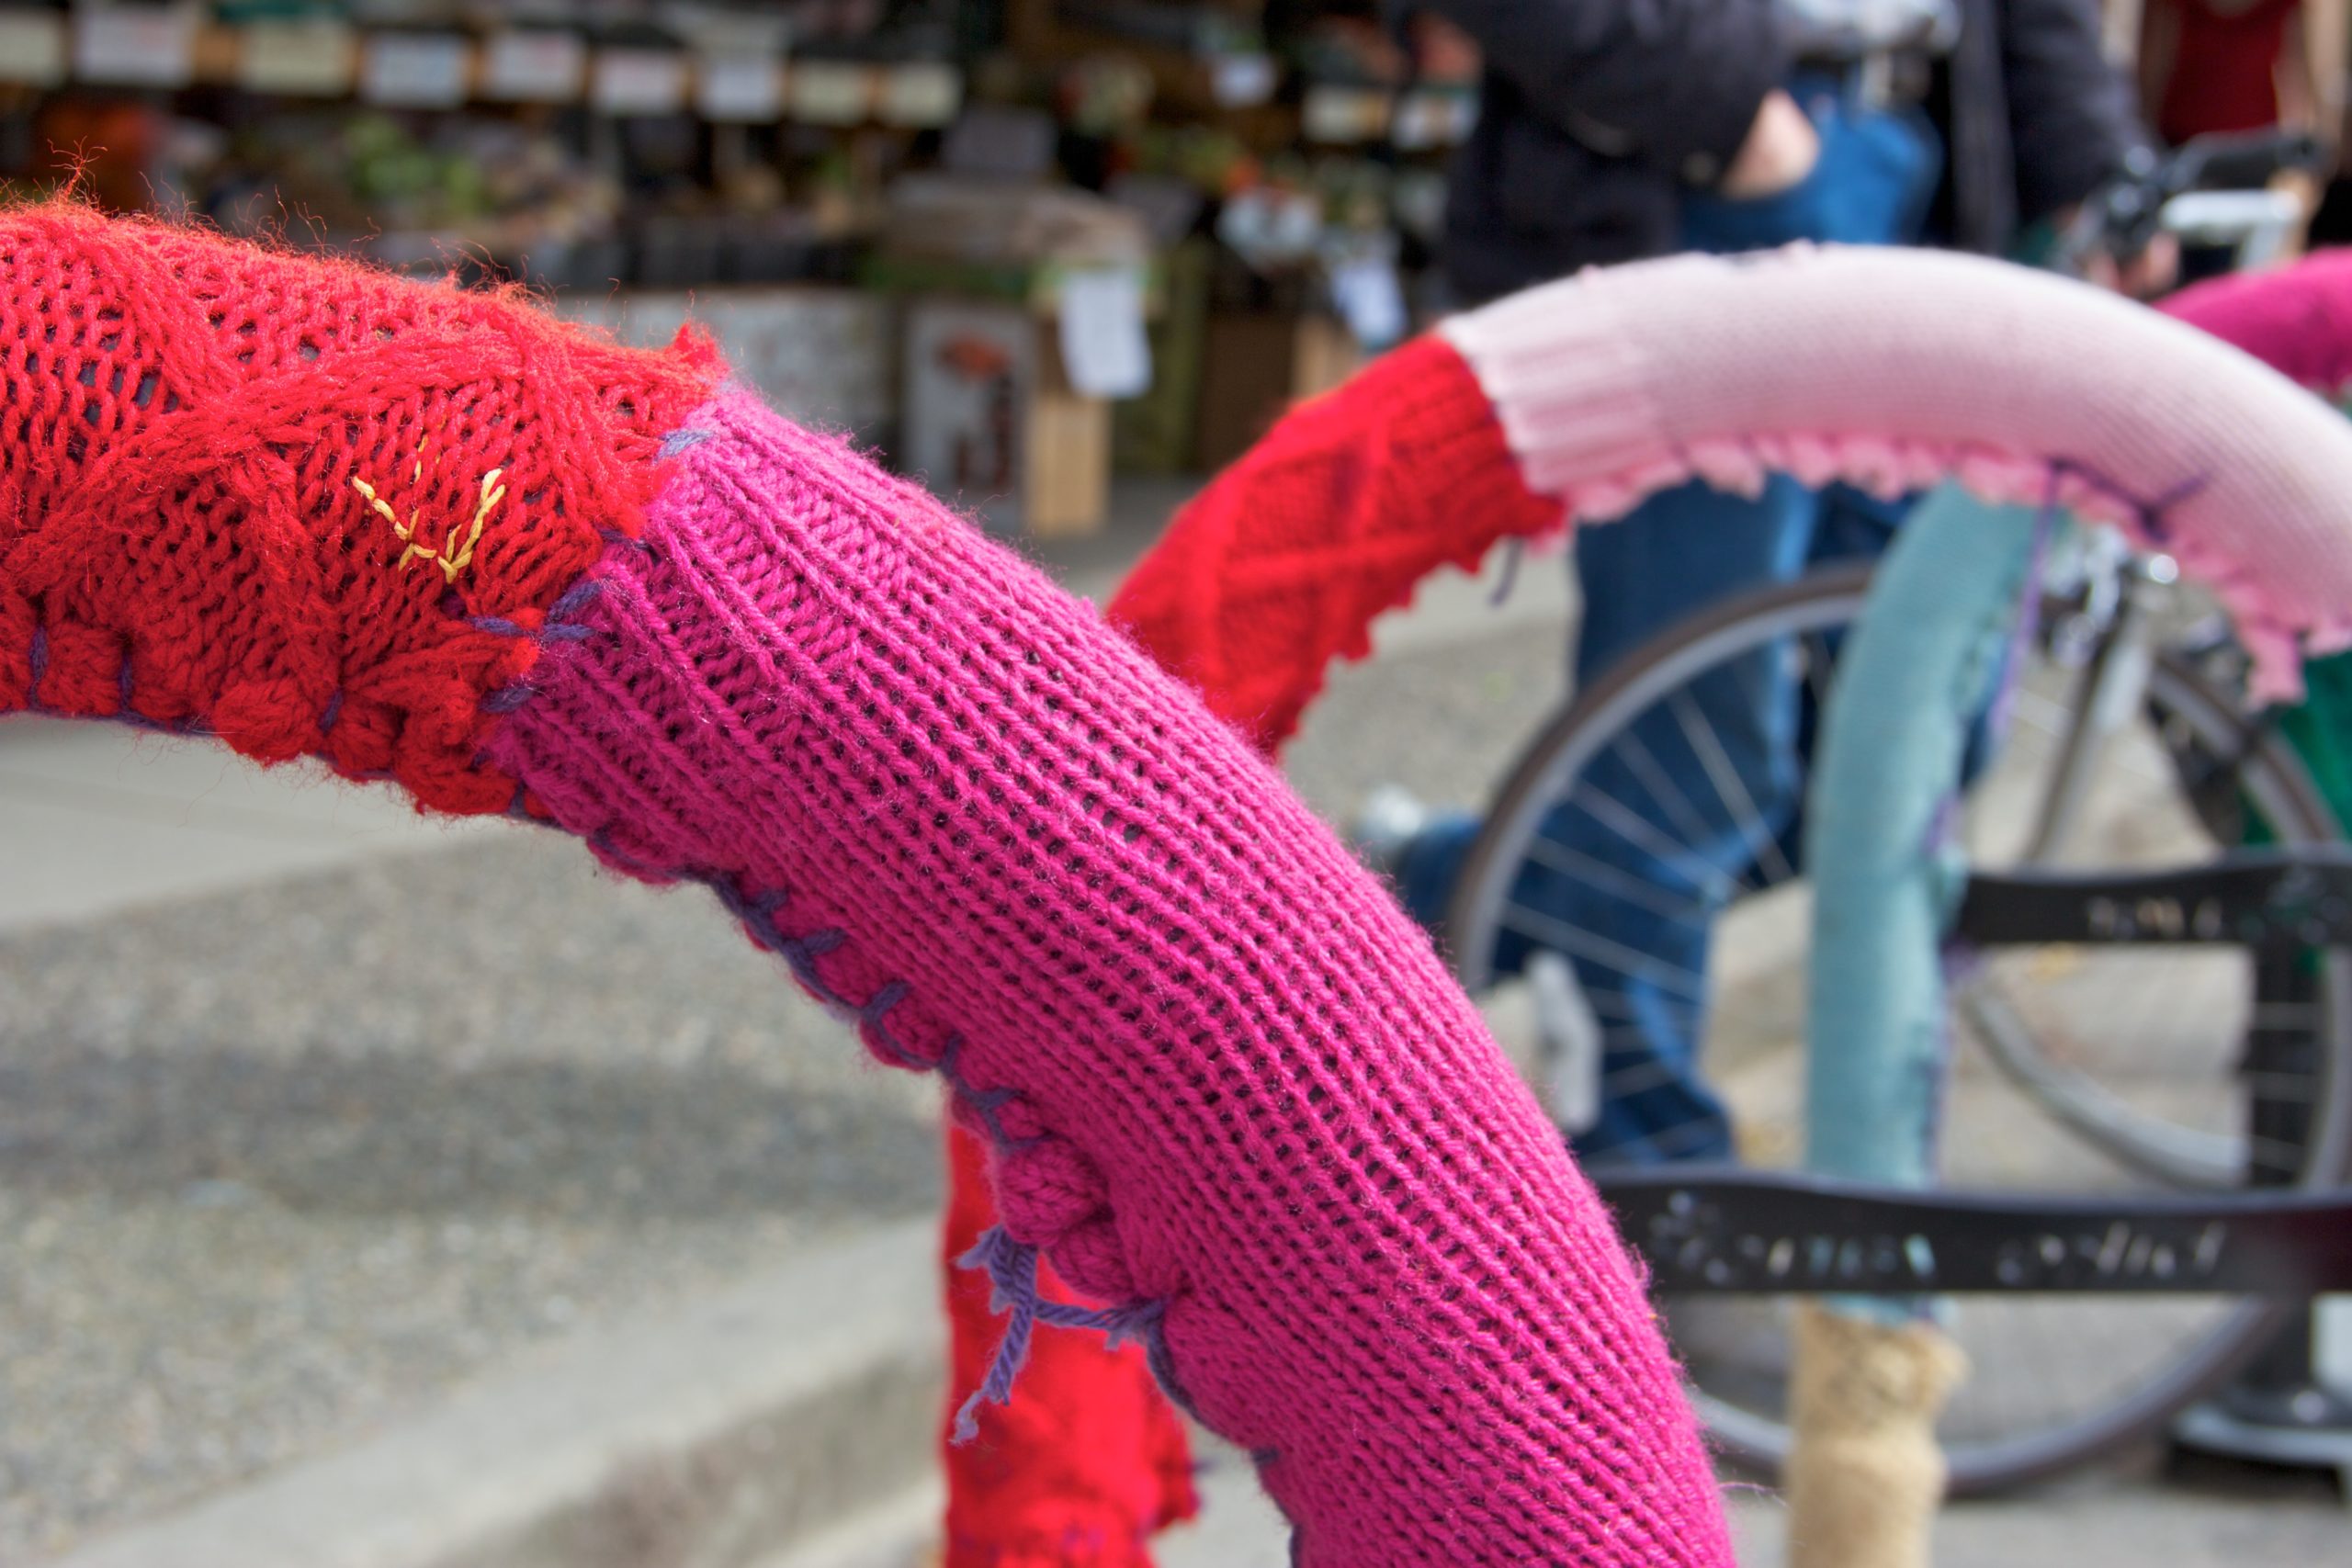 Yarn bombing bike racks in Vancouver.